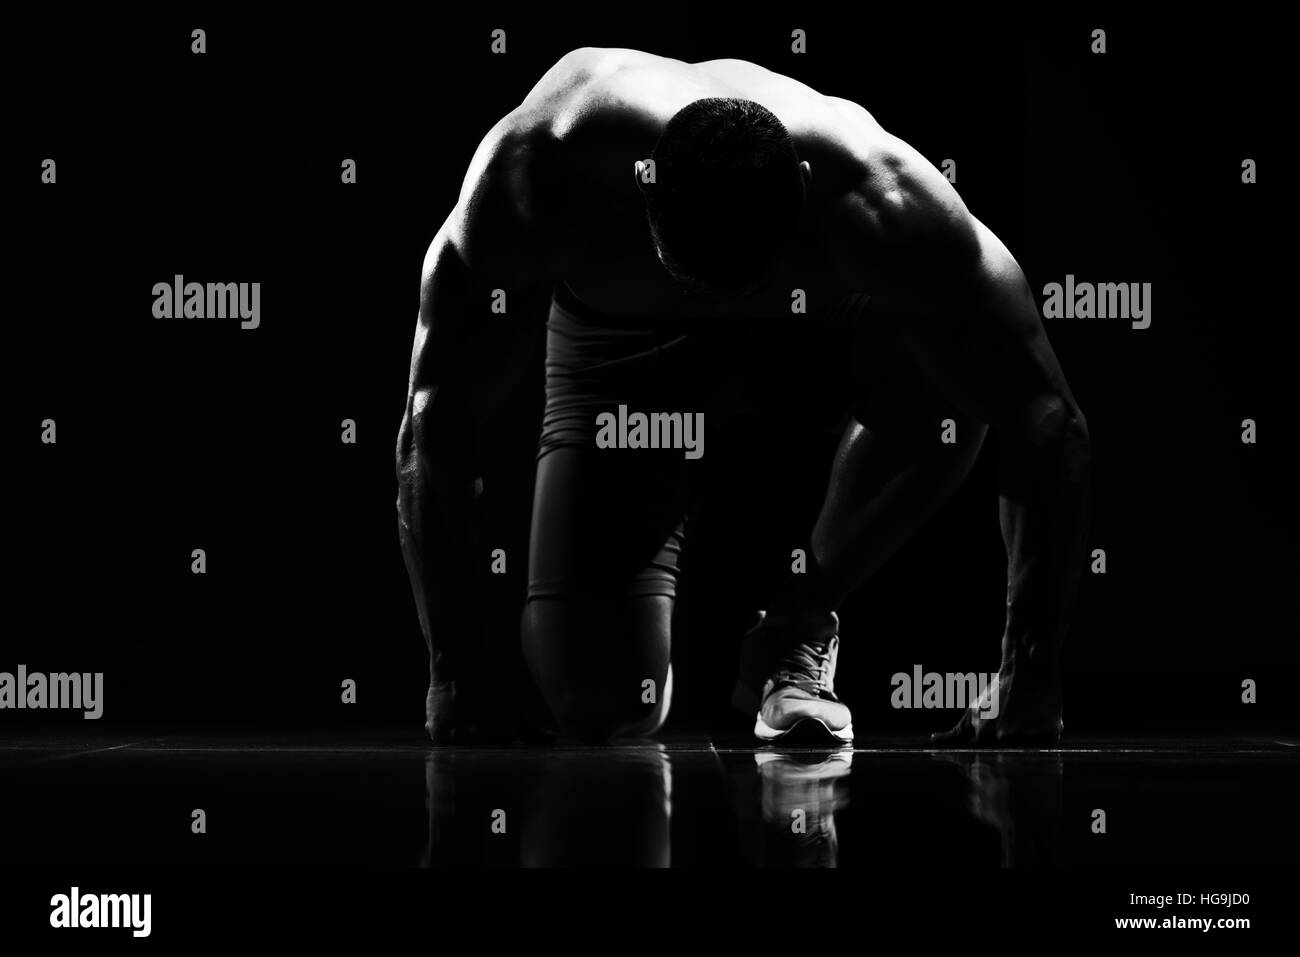 Strong Muscular Men Kneeling On The Floor - Almost Like Sprinter Starting Position Stock Photo